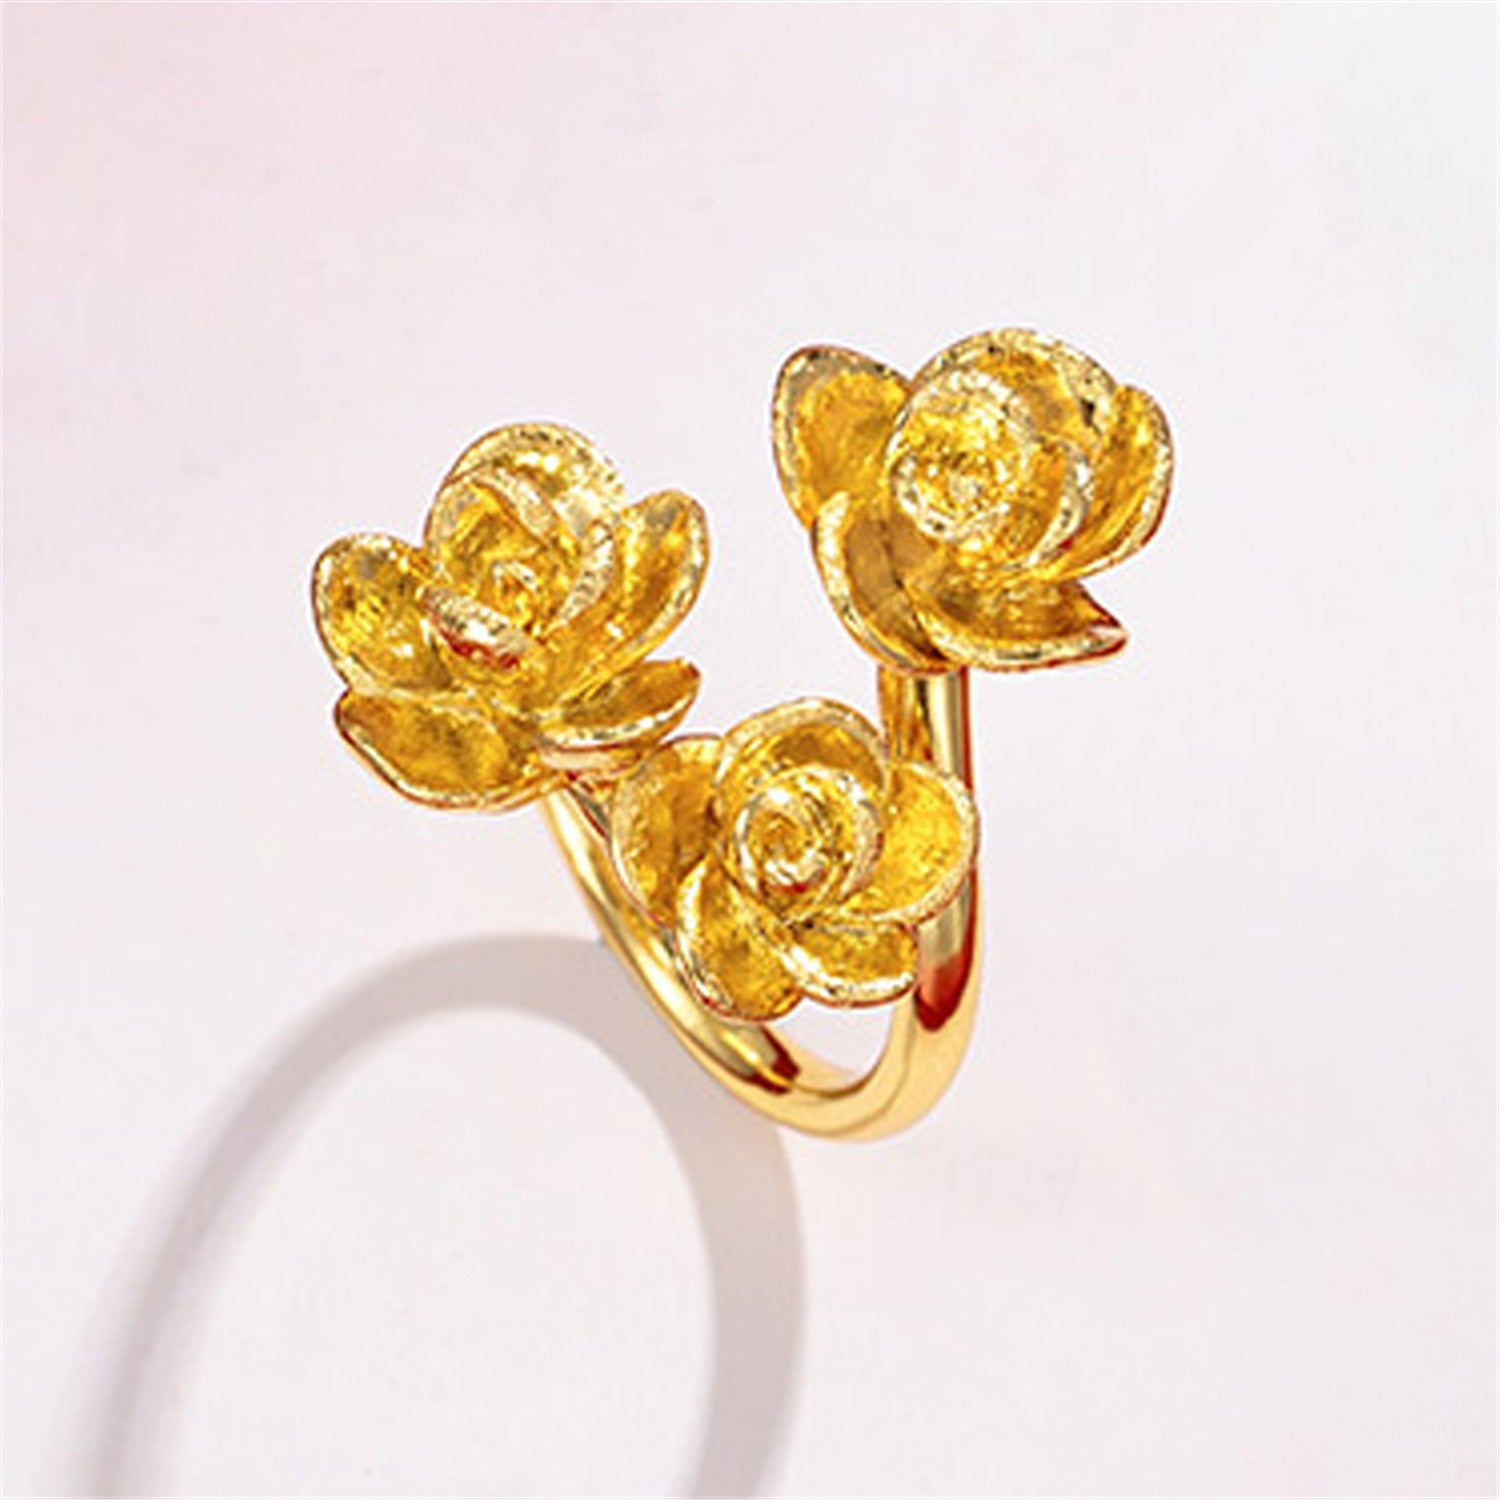 24k Gold Plating Flower Ring,French Elegance Vintage Open Ring,Rose Shape,Alluvial Gold